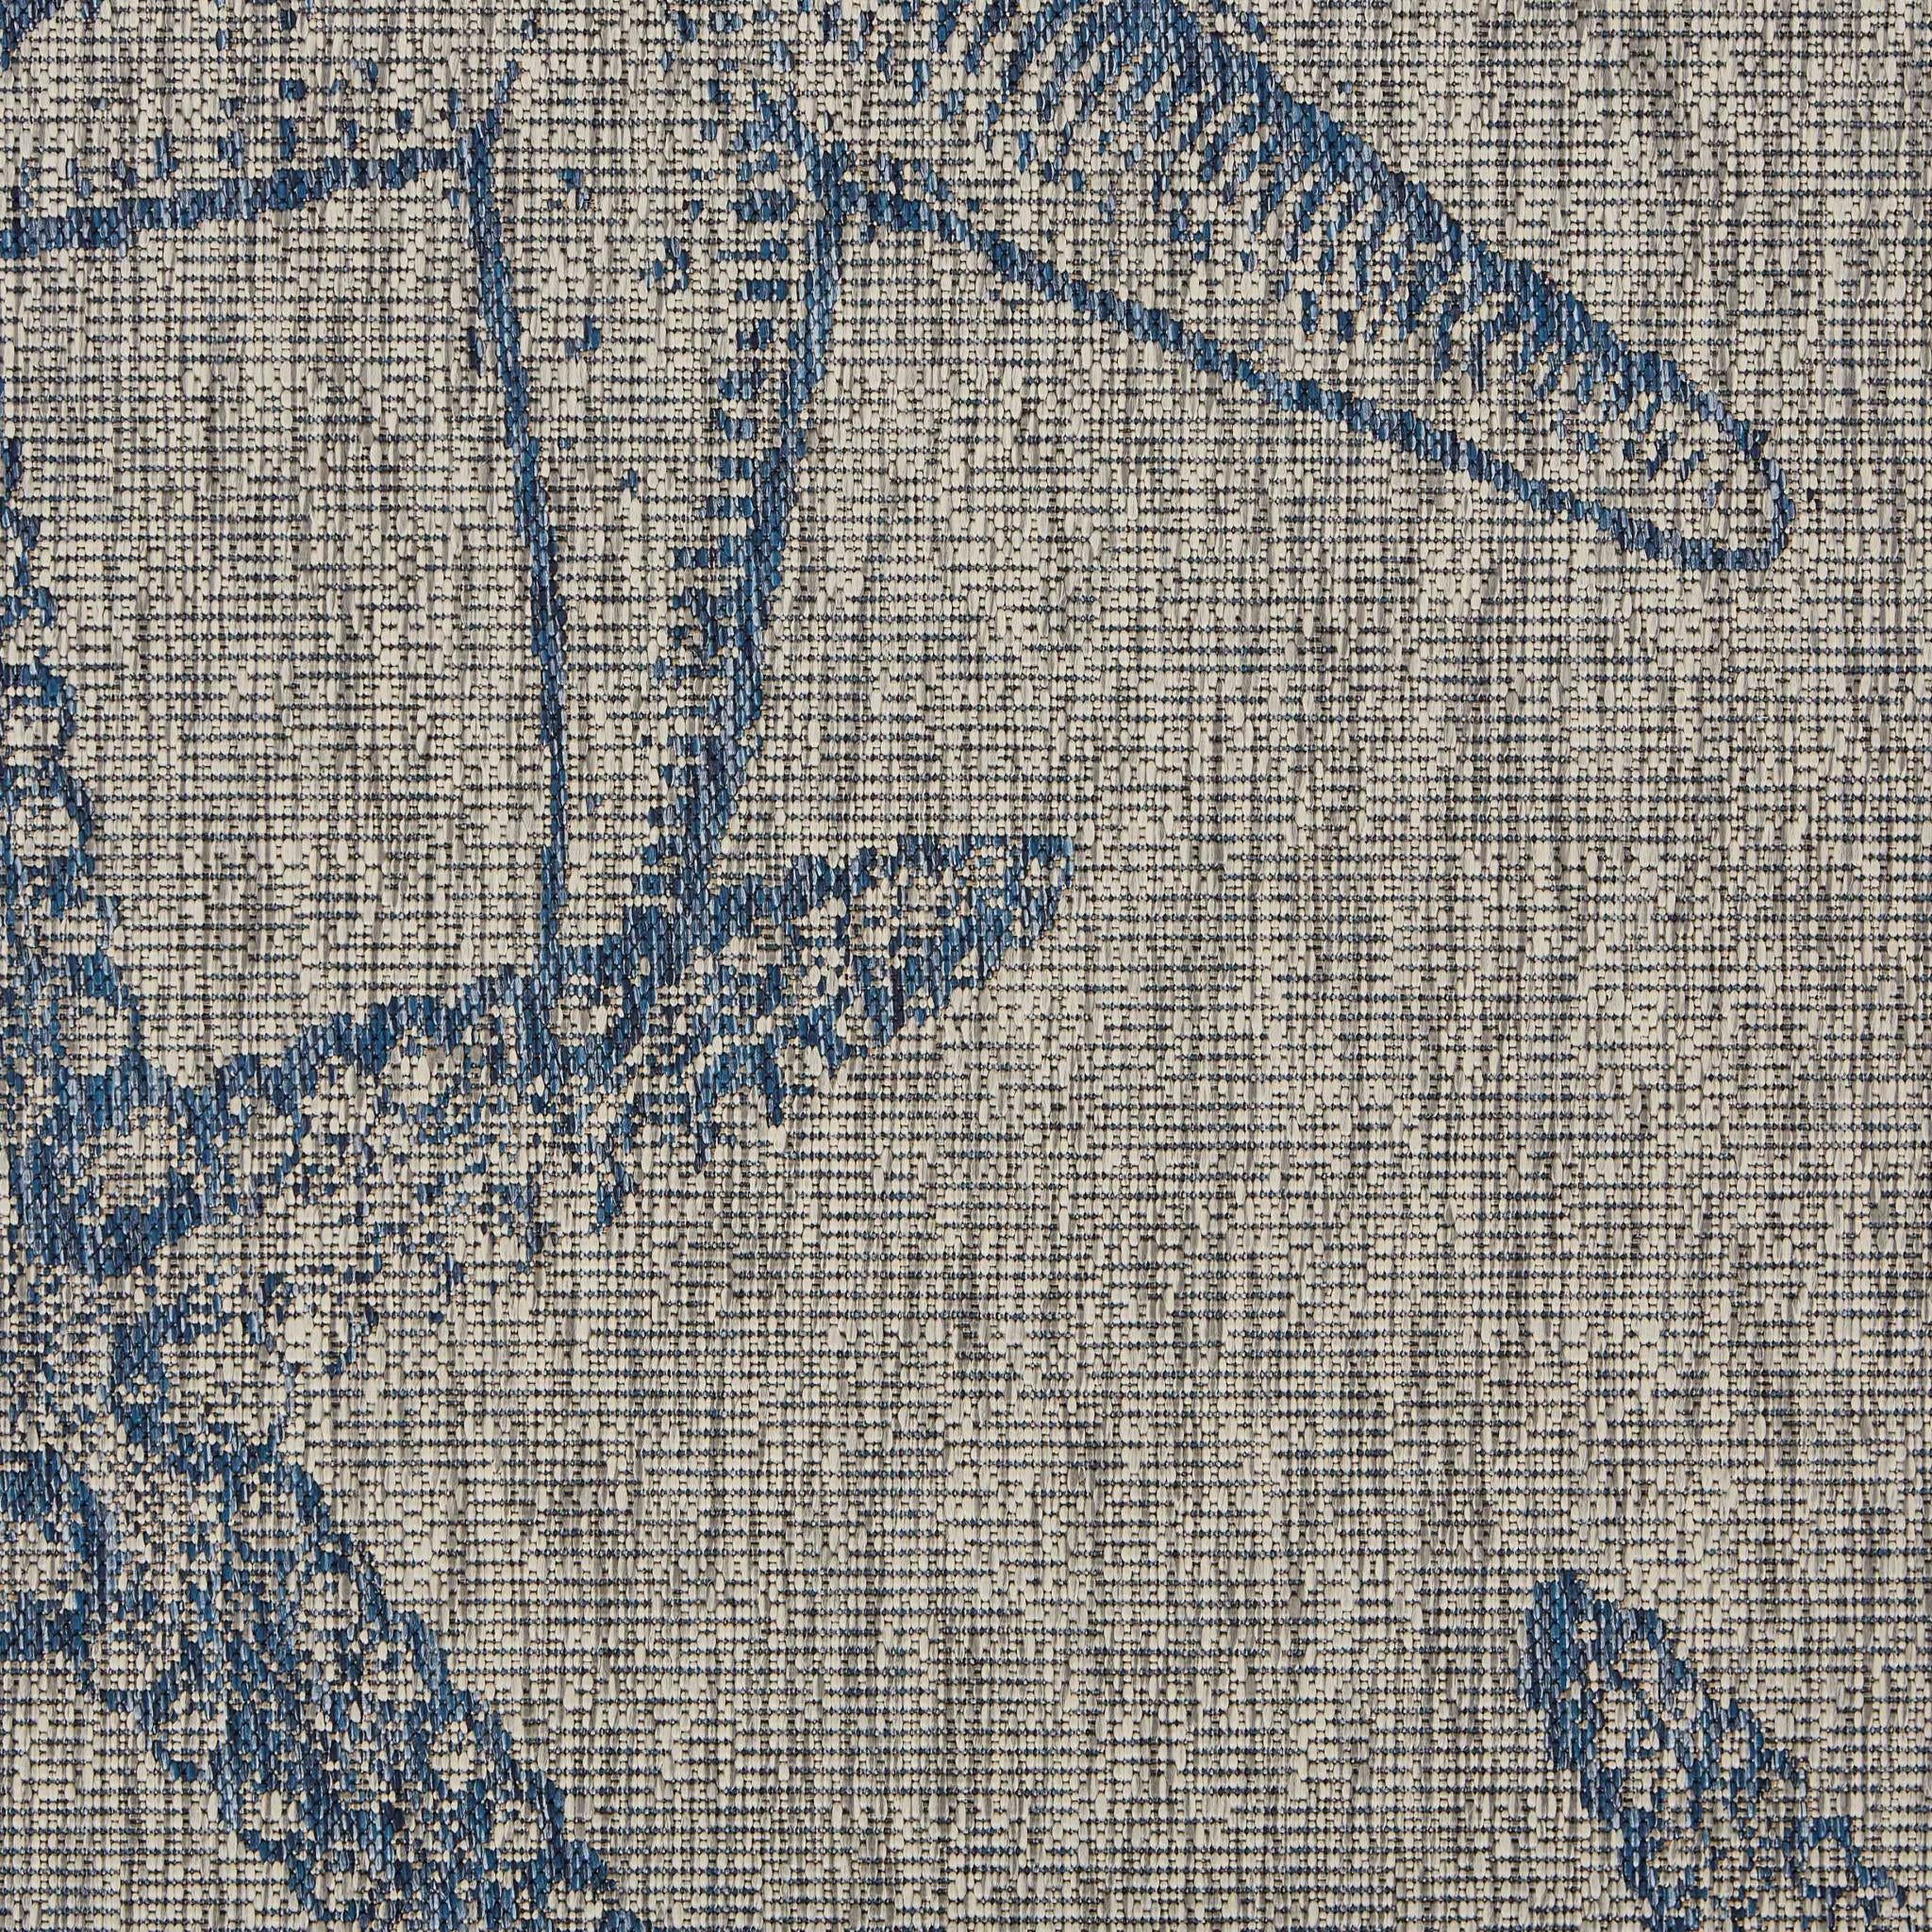 8’ x 9’ Blue Starfish Indoor Outdoor Area Rug